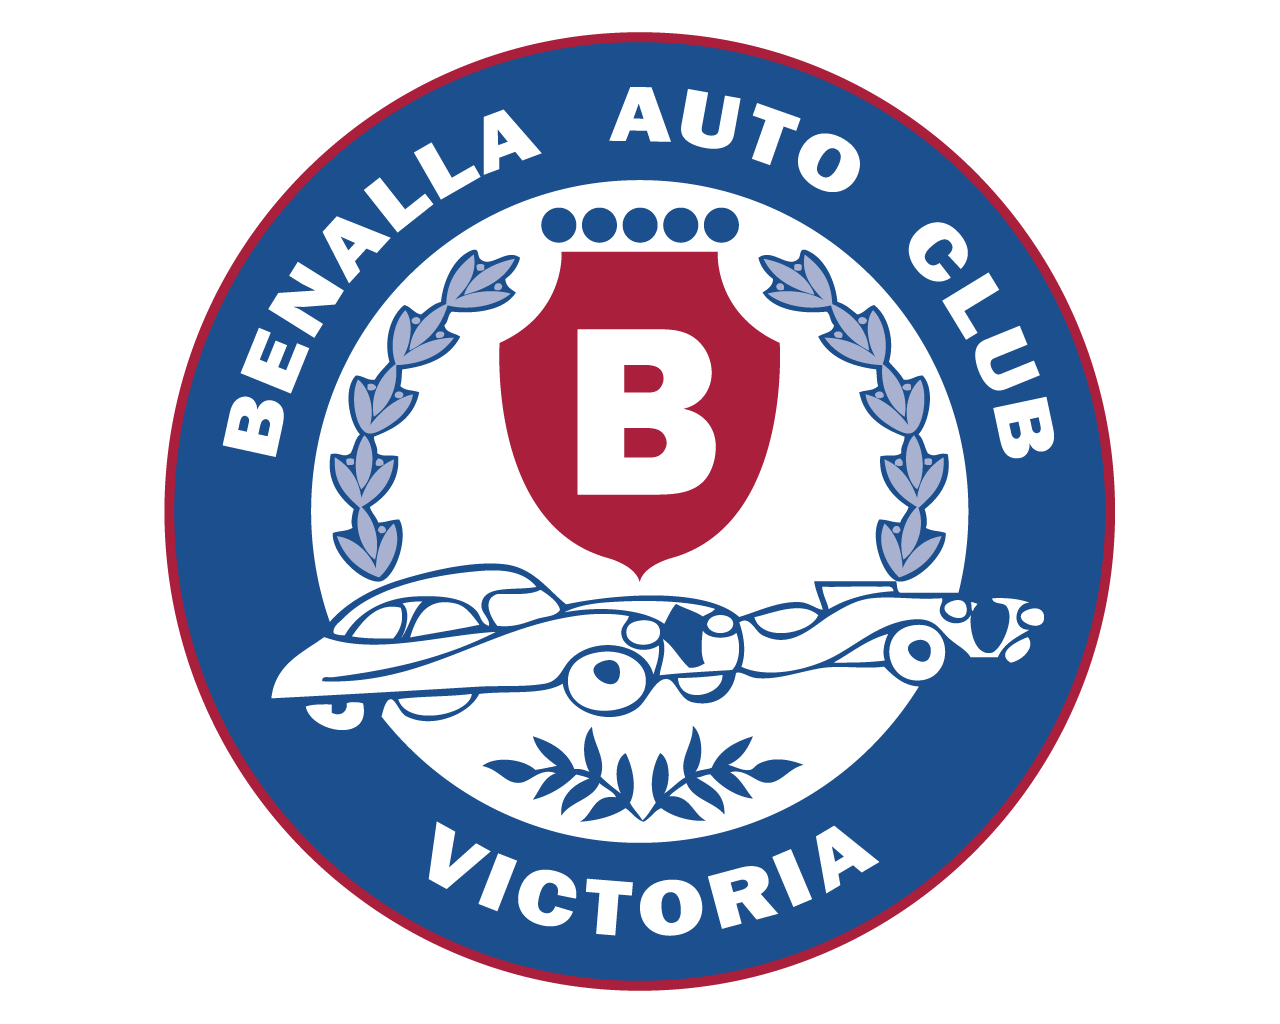 Benalla Auto Club